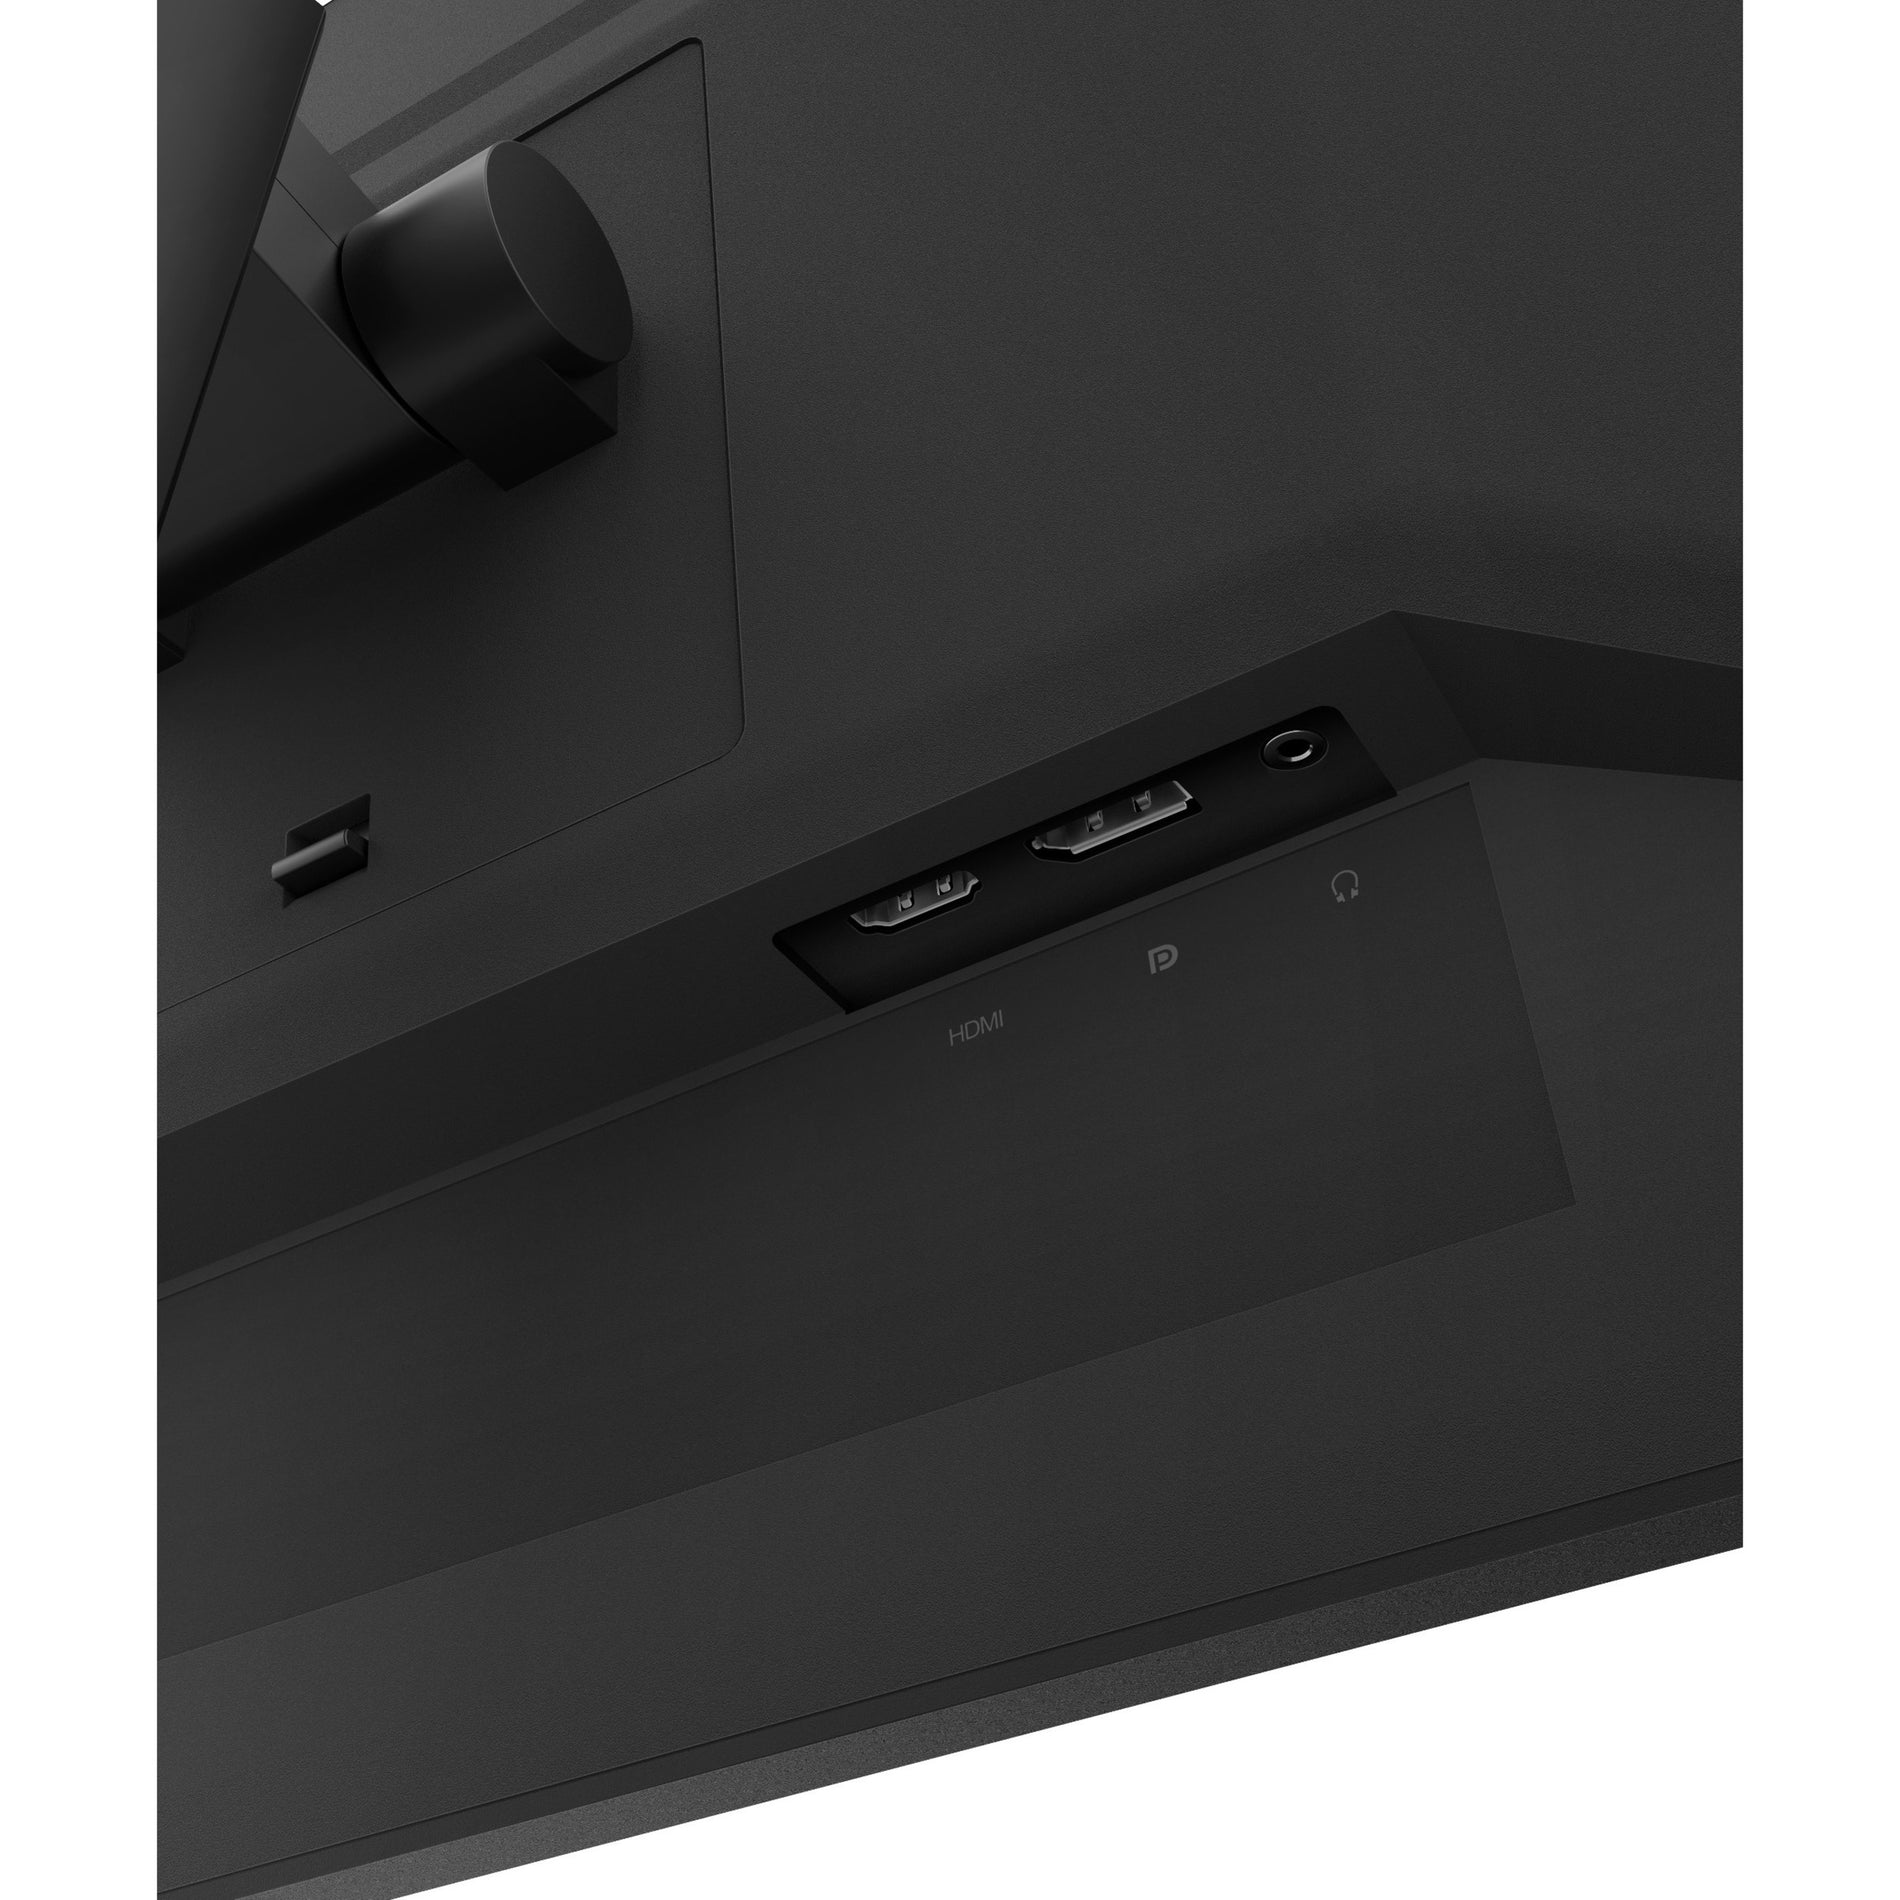 Lenovo 65FEGCC2US G25-10 24.5-inch Freesync Gaming Monitor - HDMI, 144Hz, 1ms, 72% NTSC